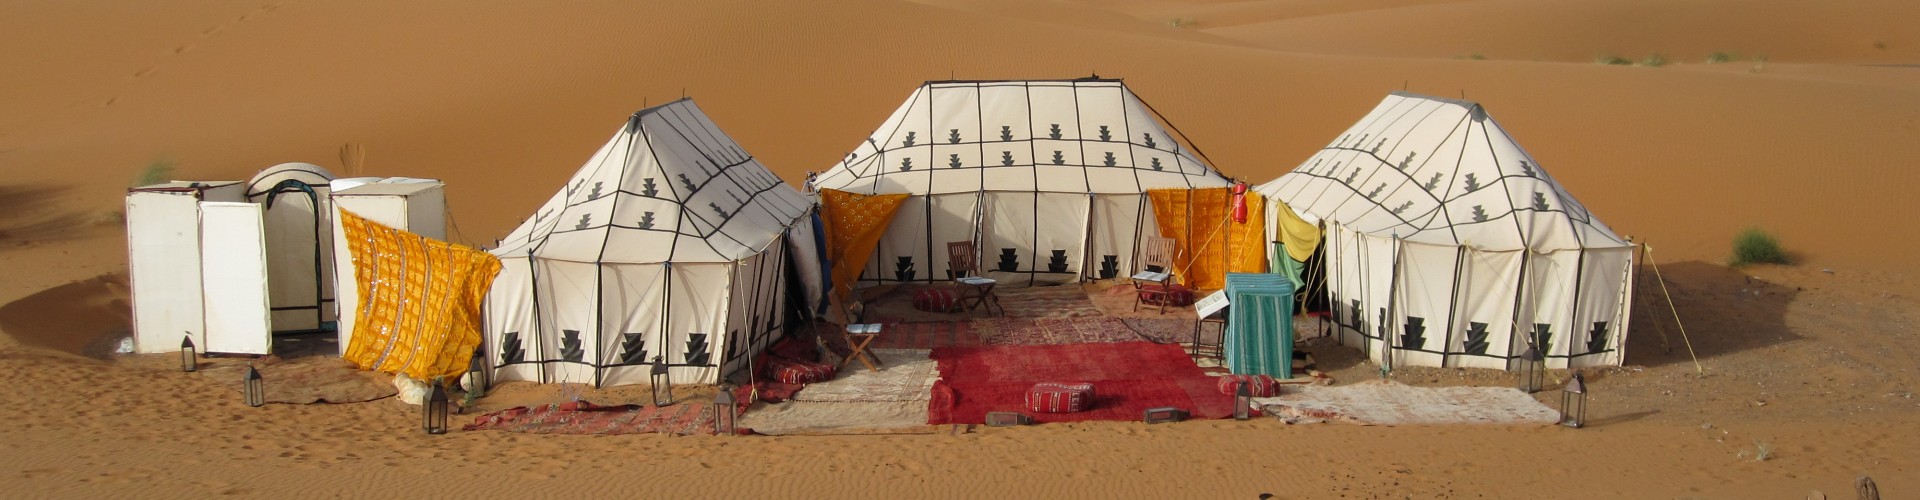 Morocco - Sahara Desert Camp